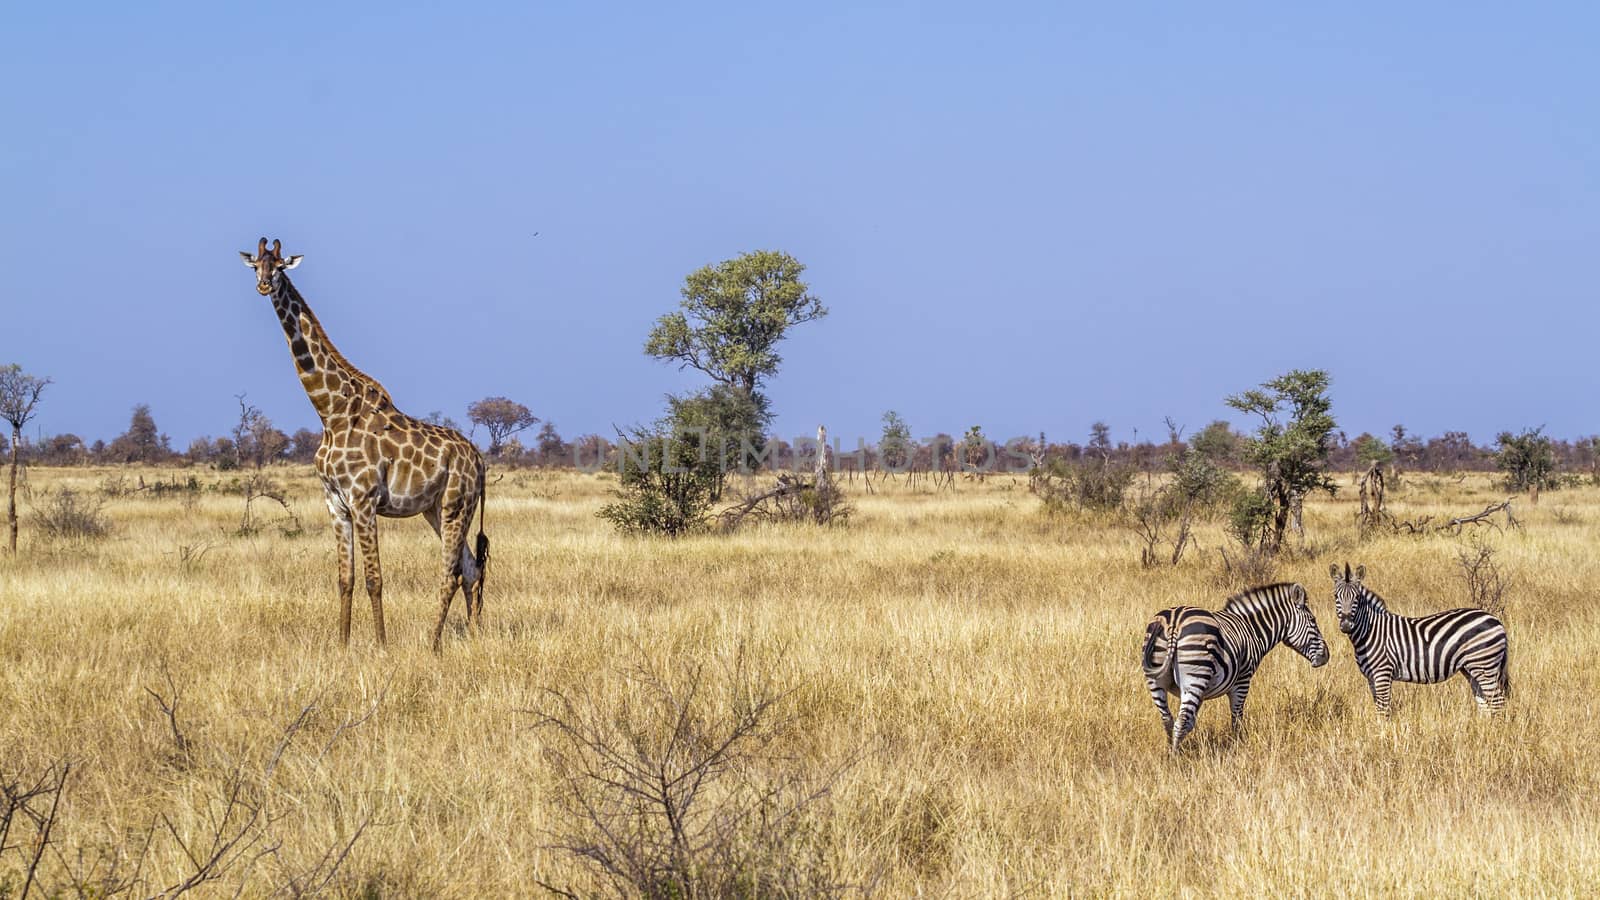 Giraffe and plains zebra in dry savannah scenery in Kruger National park, South Africa ; Specie Giraffa camelopardalis family of Giraffidae